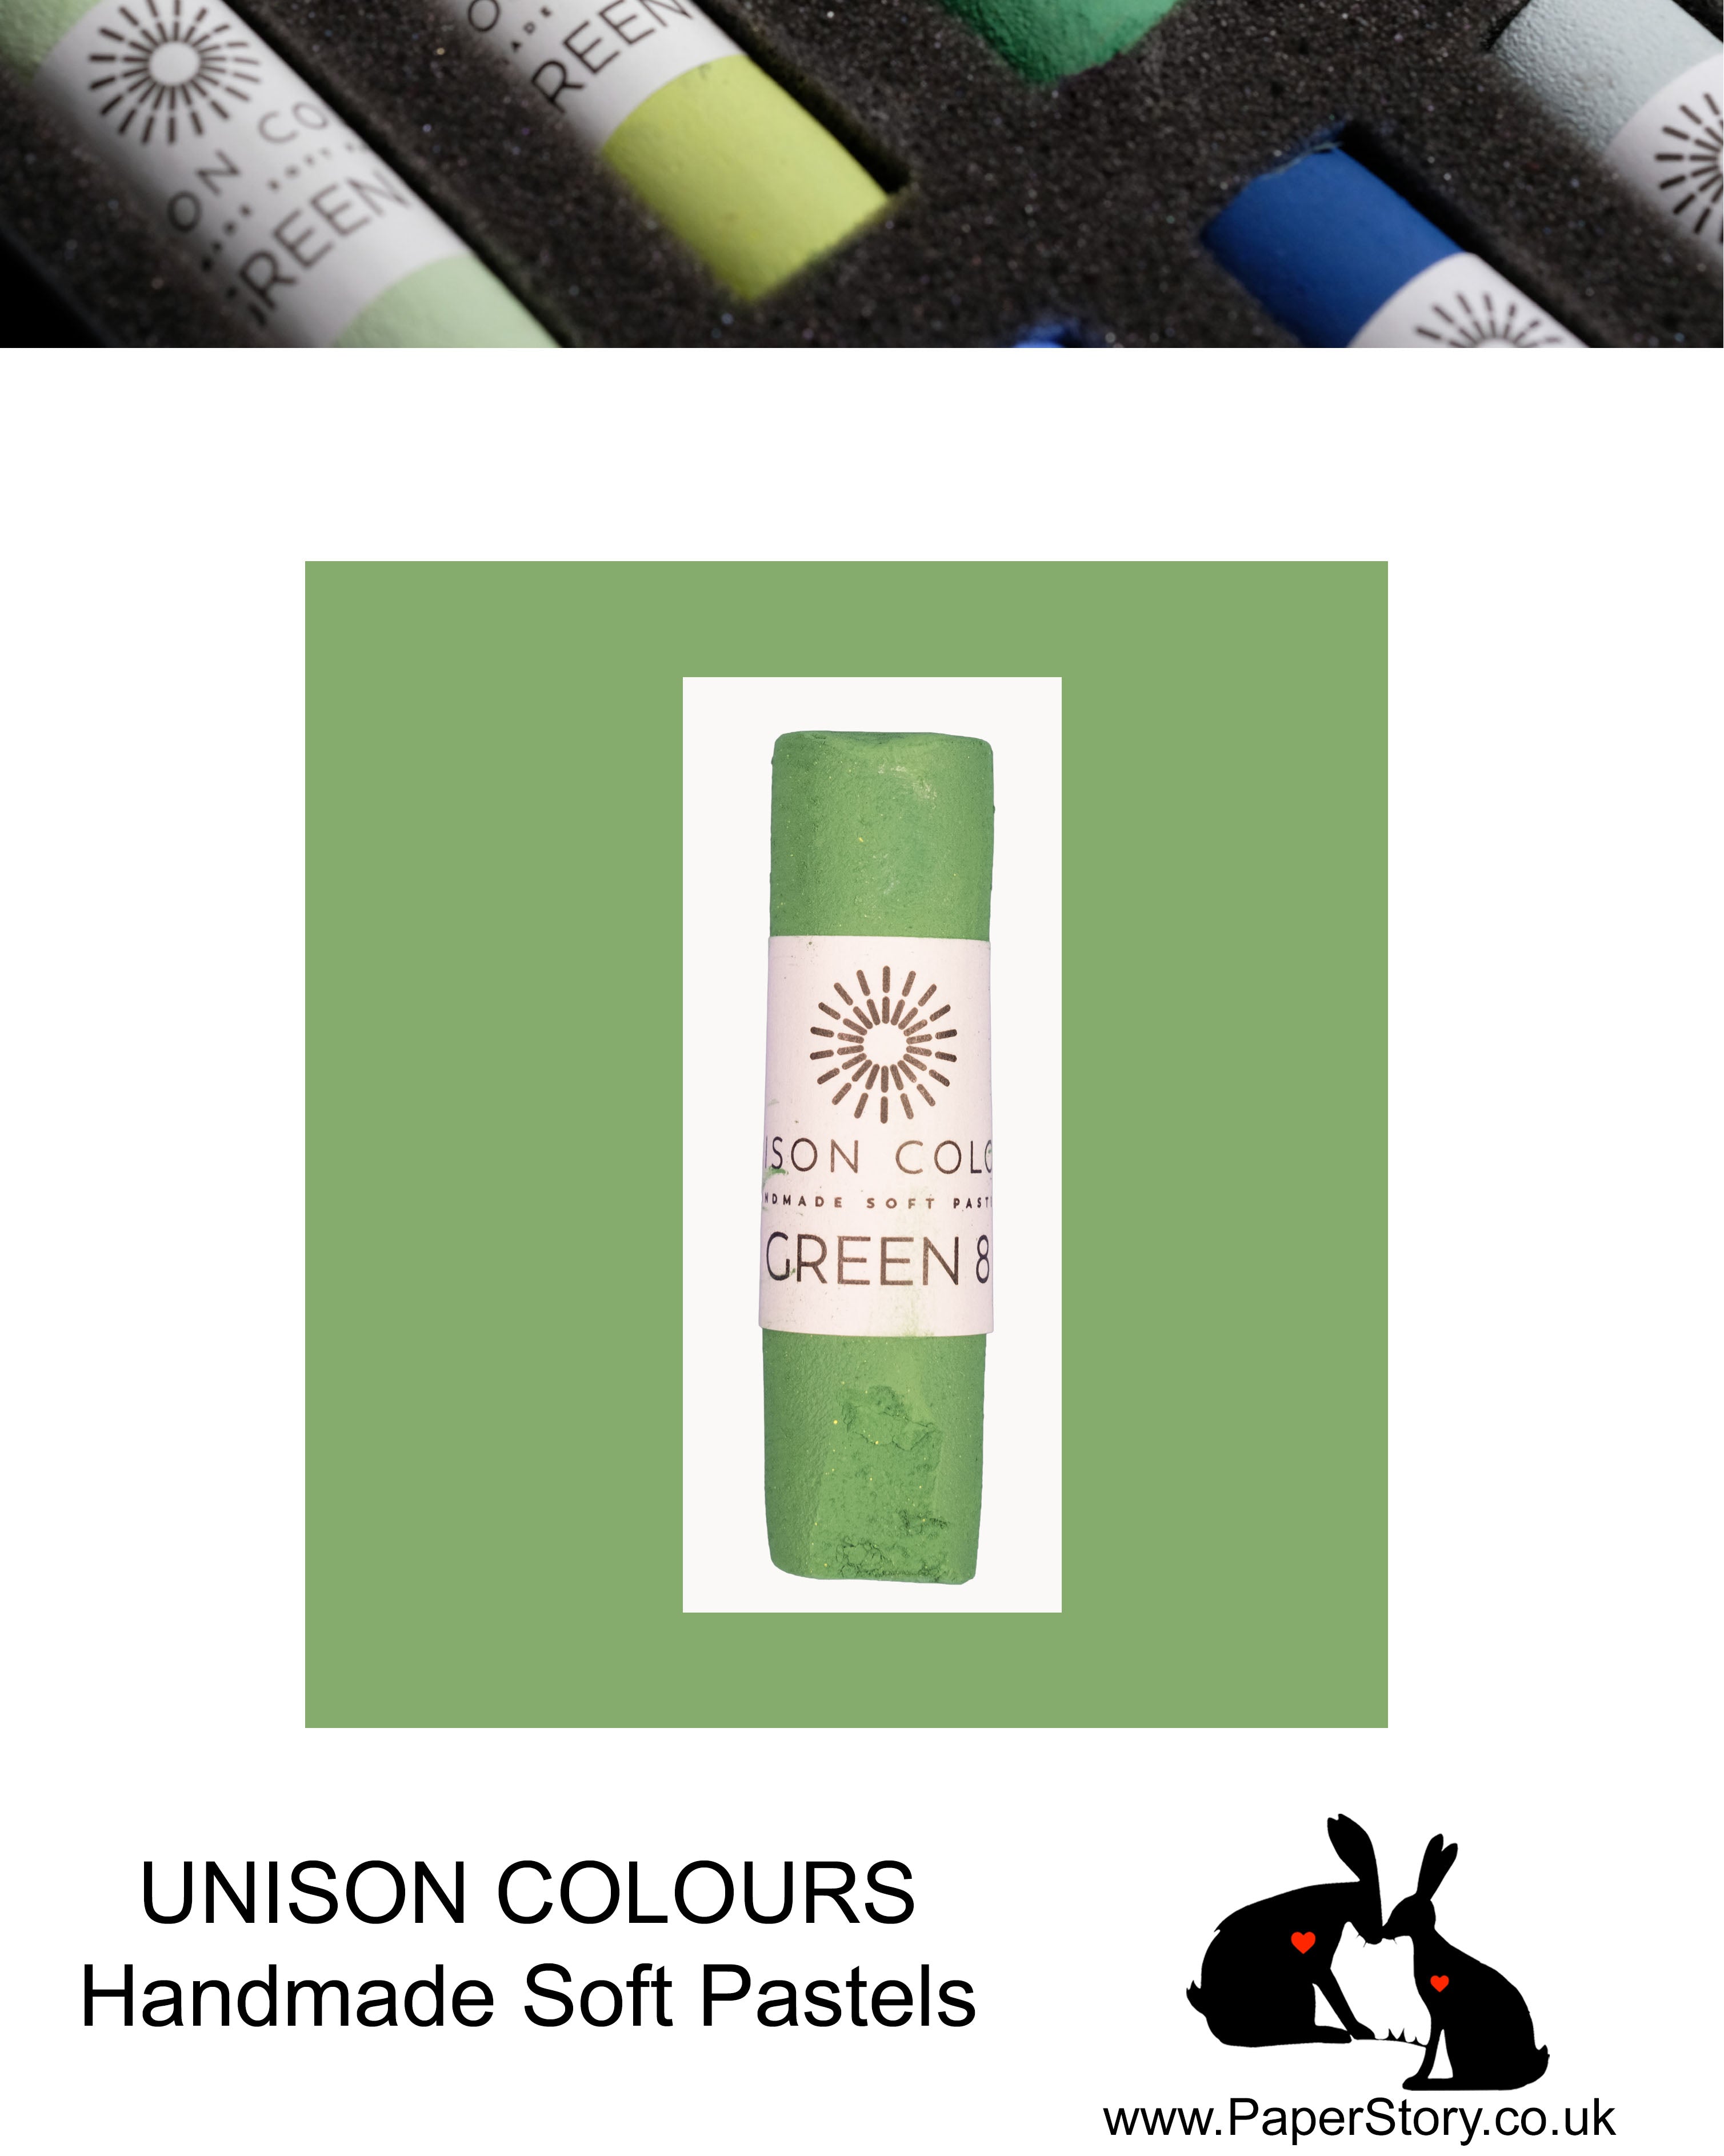 Unison Colour Handmade Soft Pastels Green 8 - Size Regular